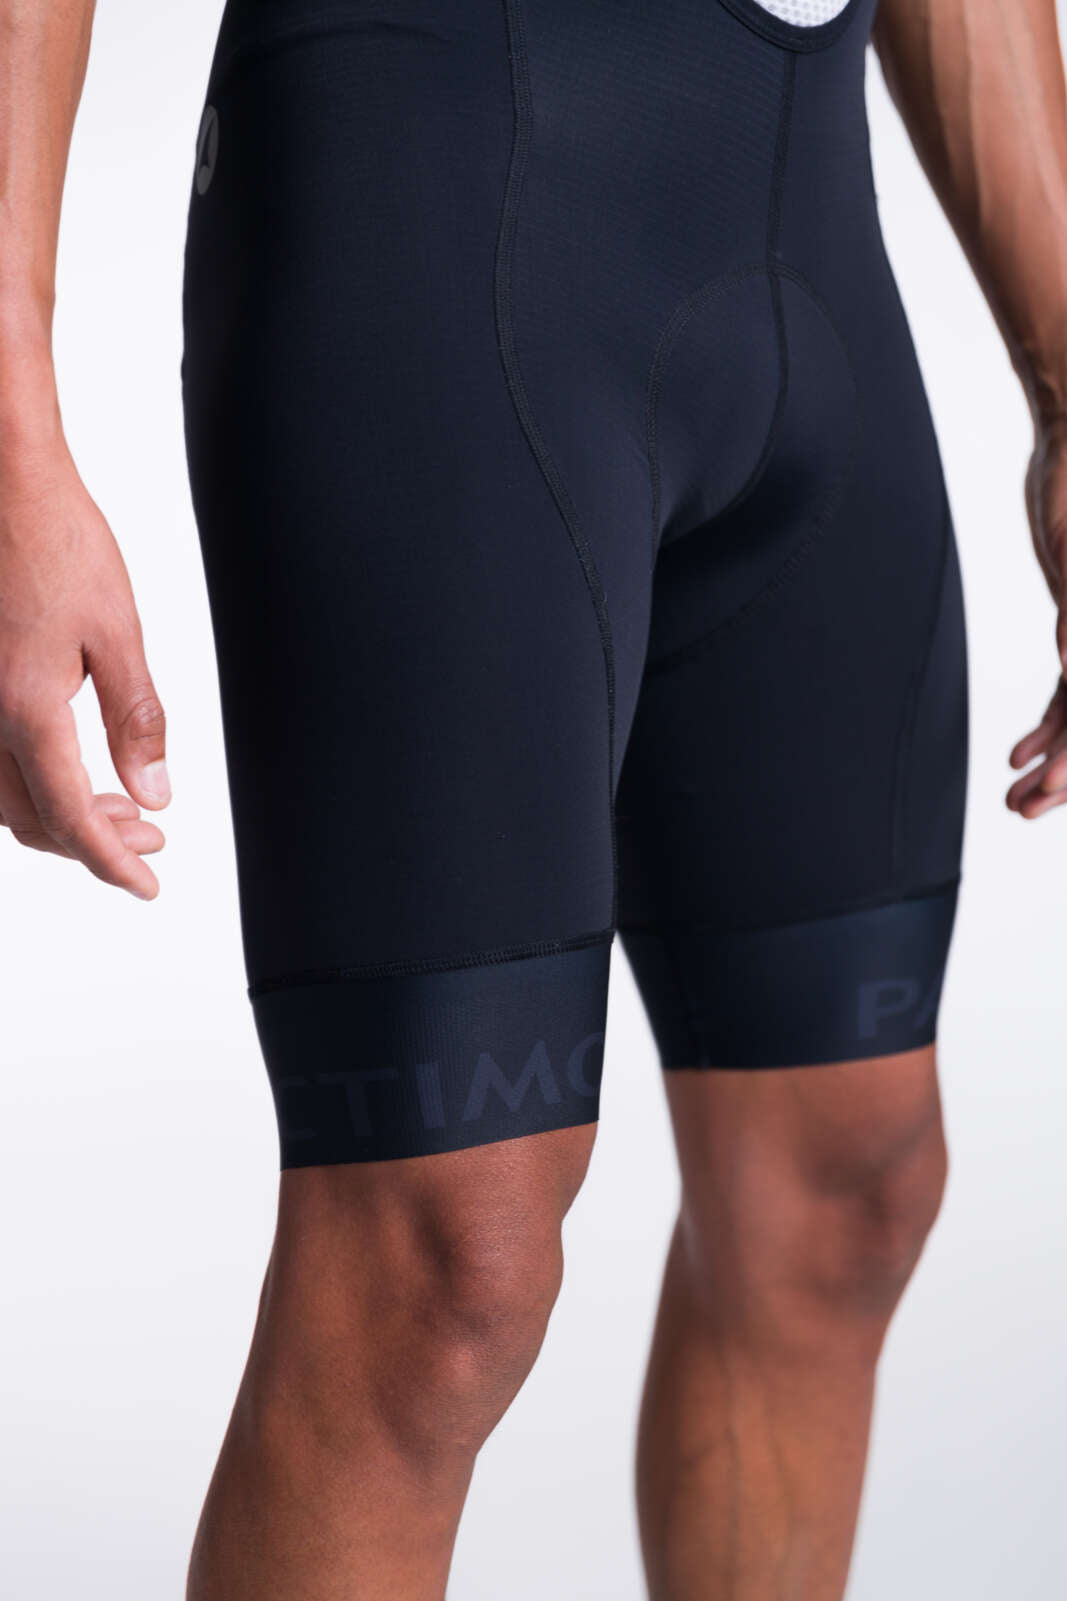 Men's Black Cycling Bibs - Ascent Vector Pro Leg Band Detail